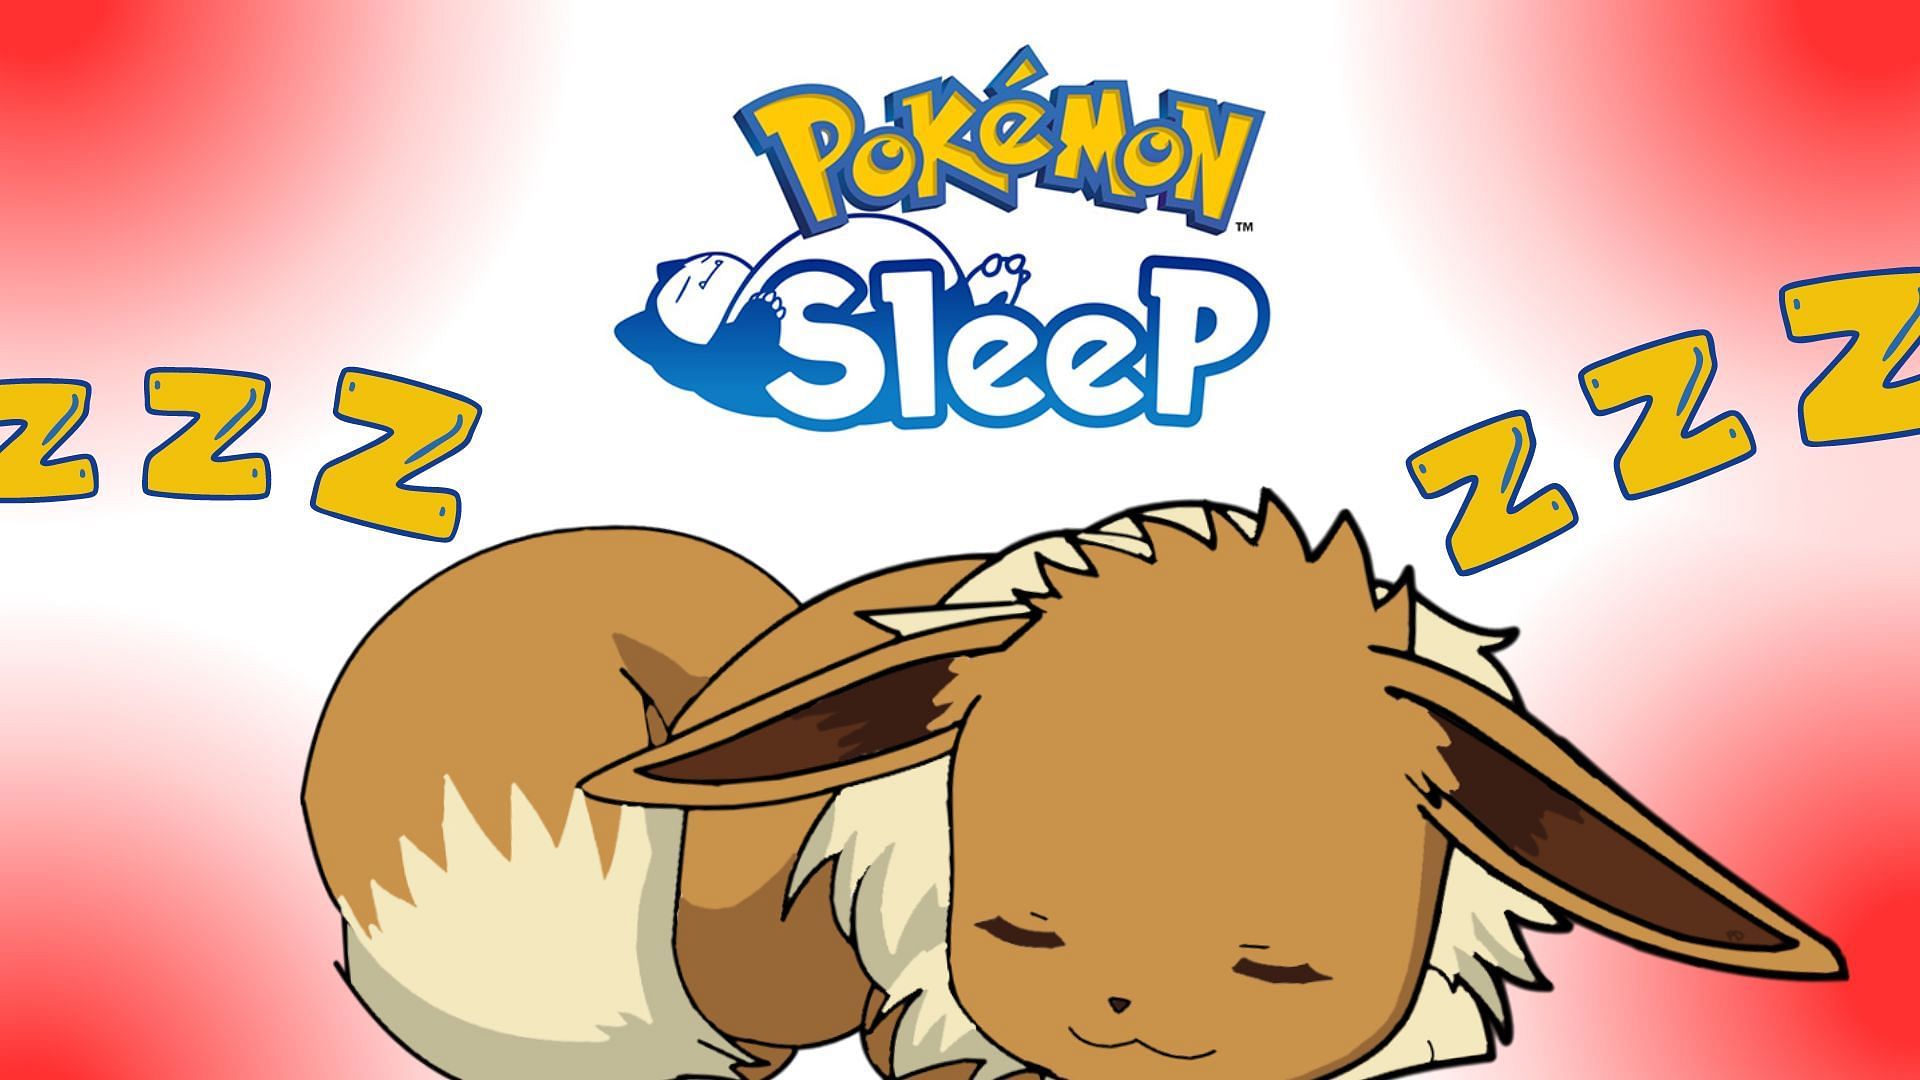 How to Awake Pokemon from Sleep in Let's Go Pikachu, Eevee